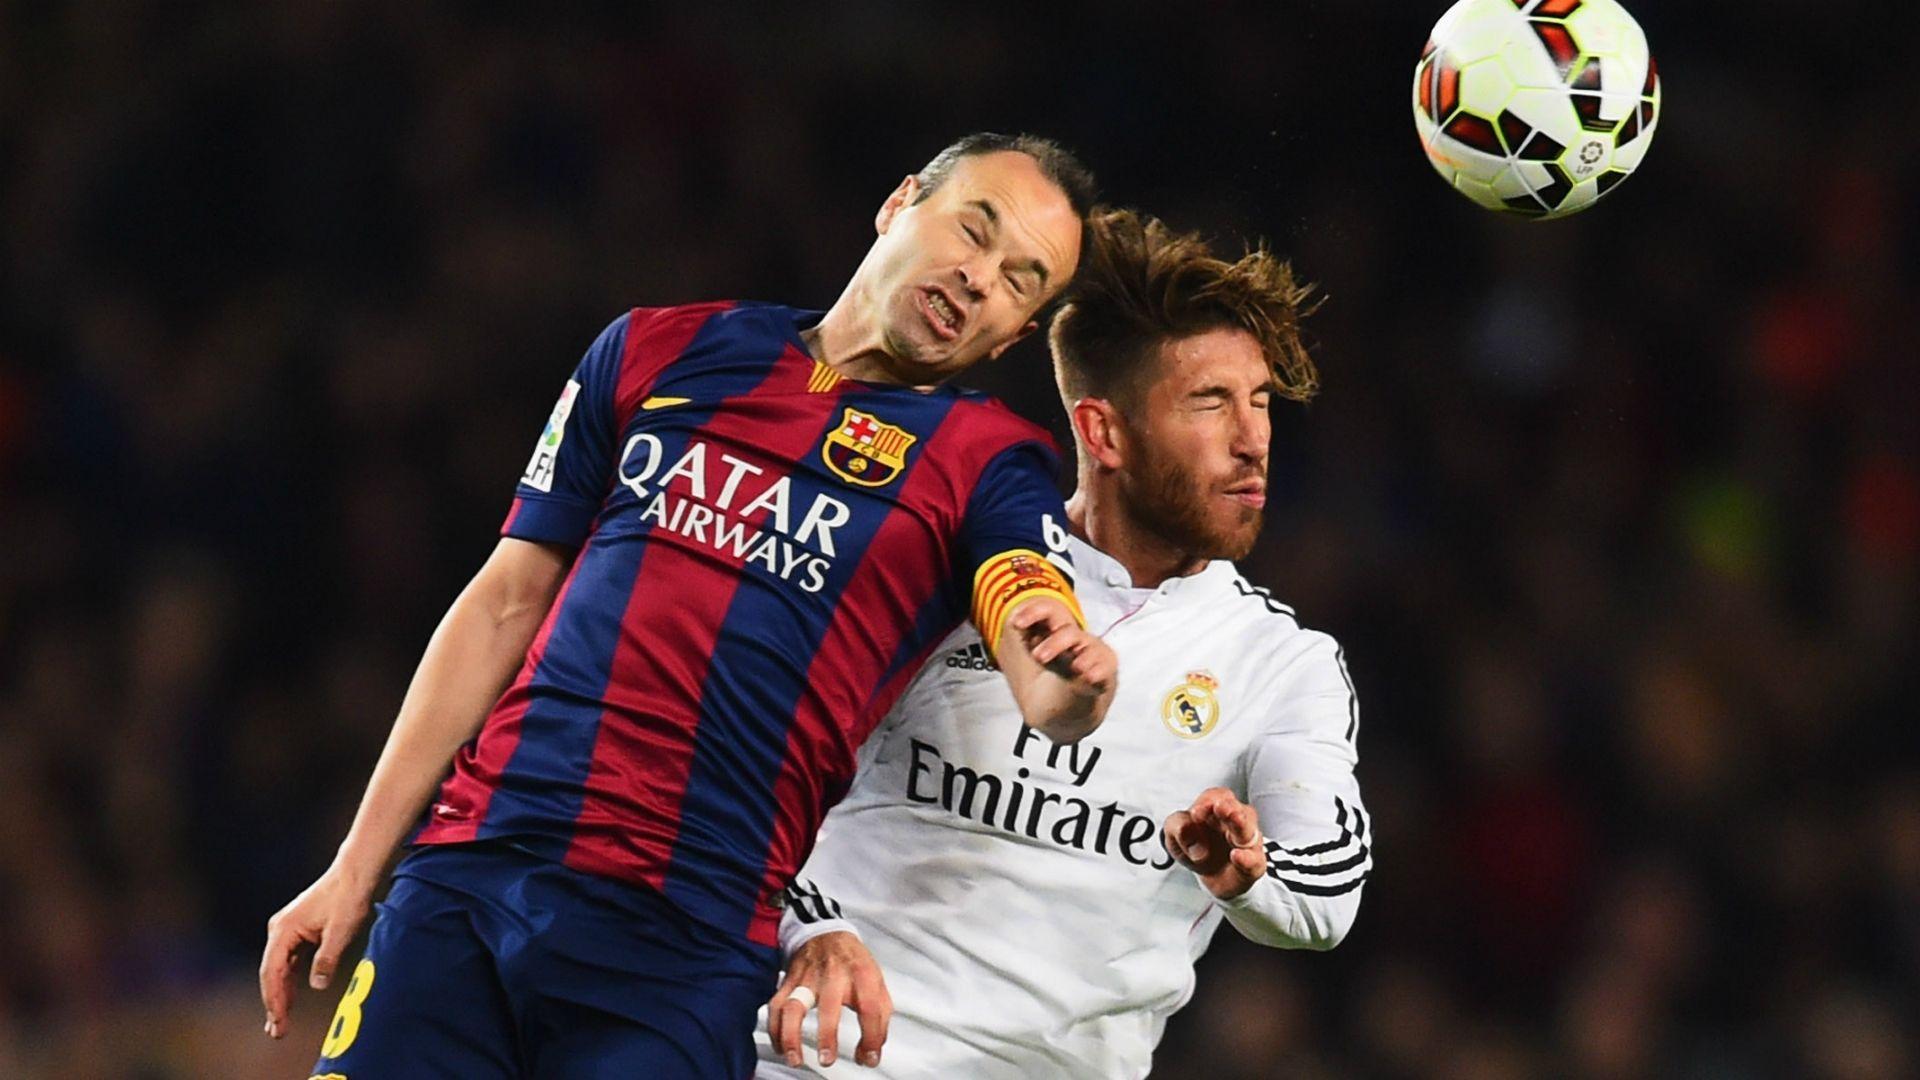 Barcelona Player Sergioramos Kicking Ball Wallpaper: Players